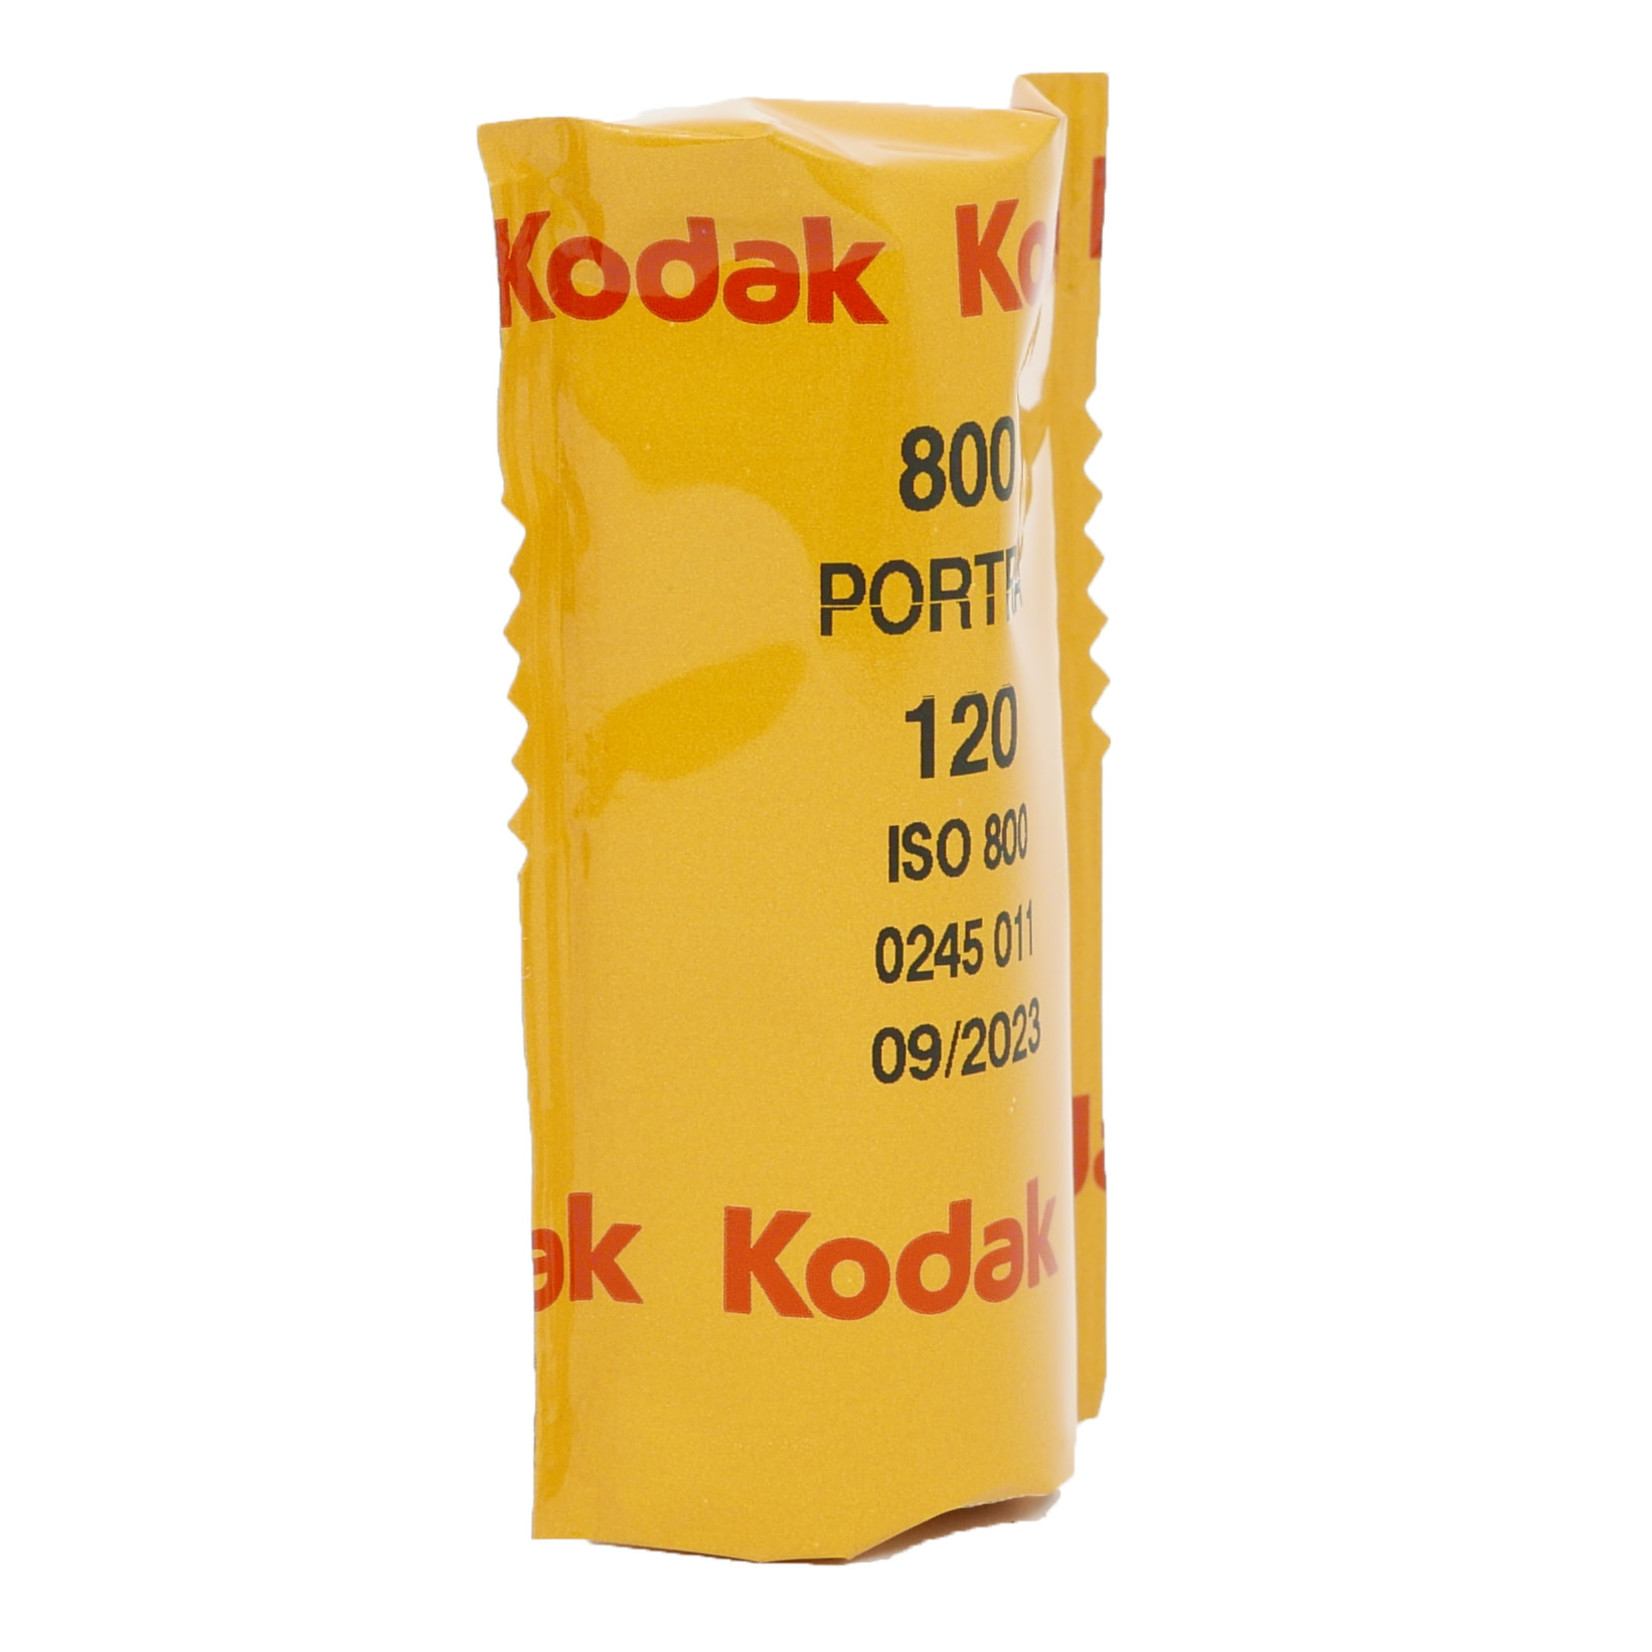 Kodak Kodak Portra 800 120